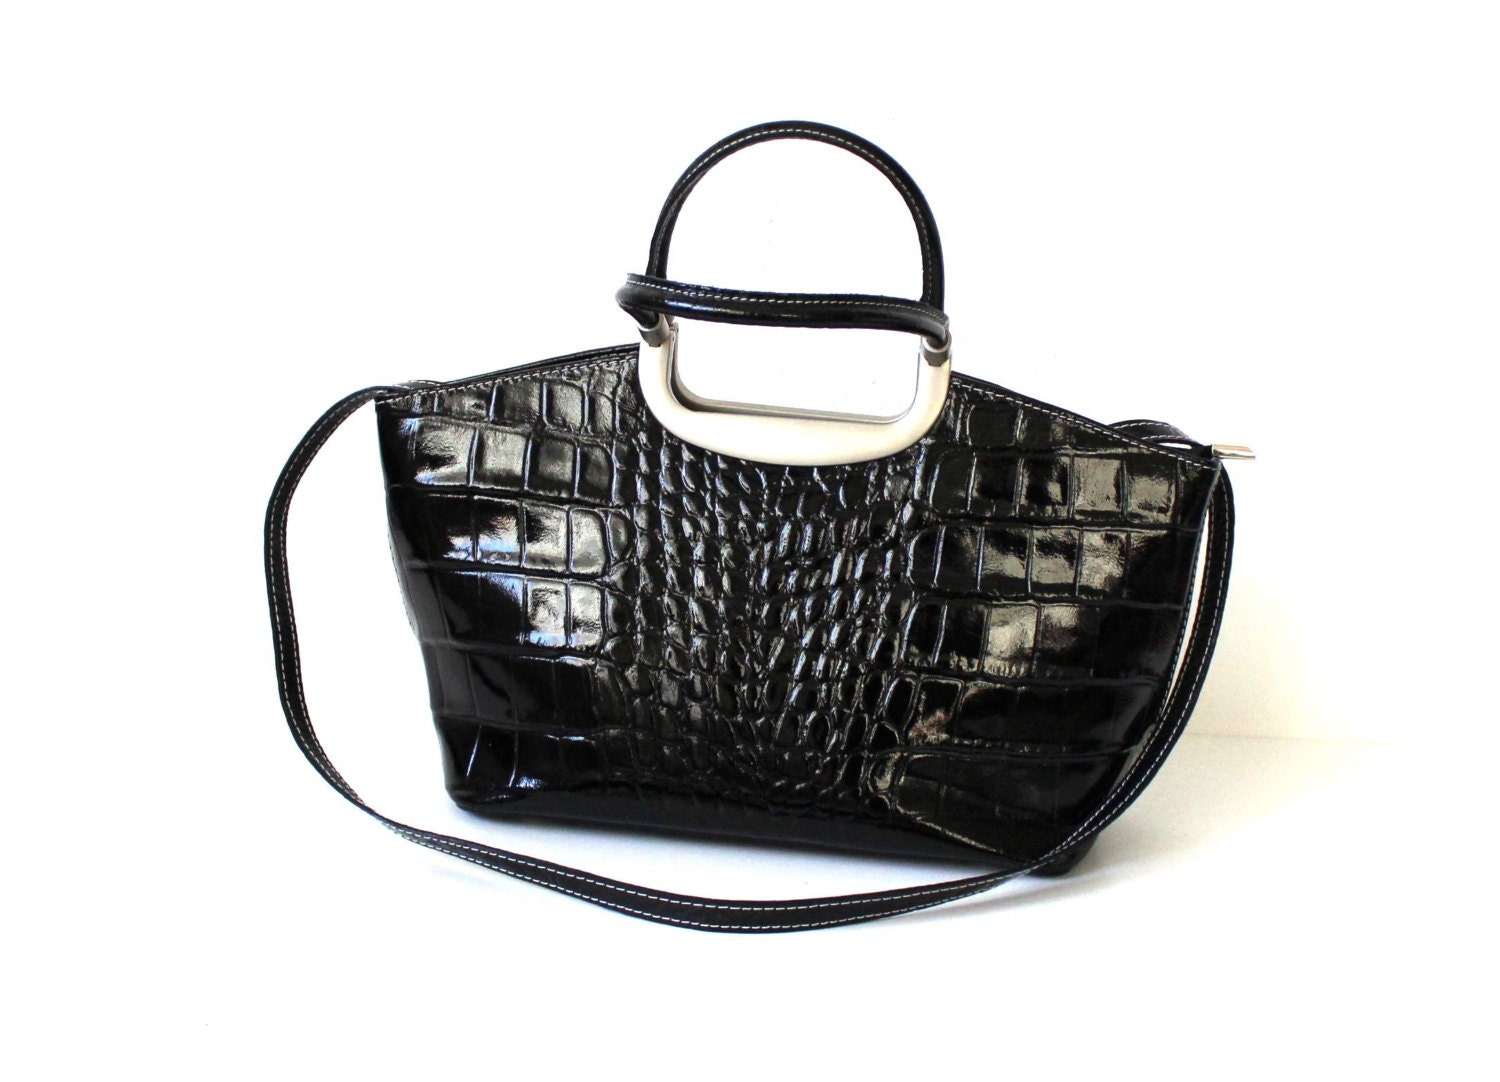 Black Patent Leather Handbag Ladys Purse with Metal Handle